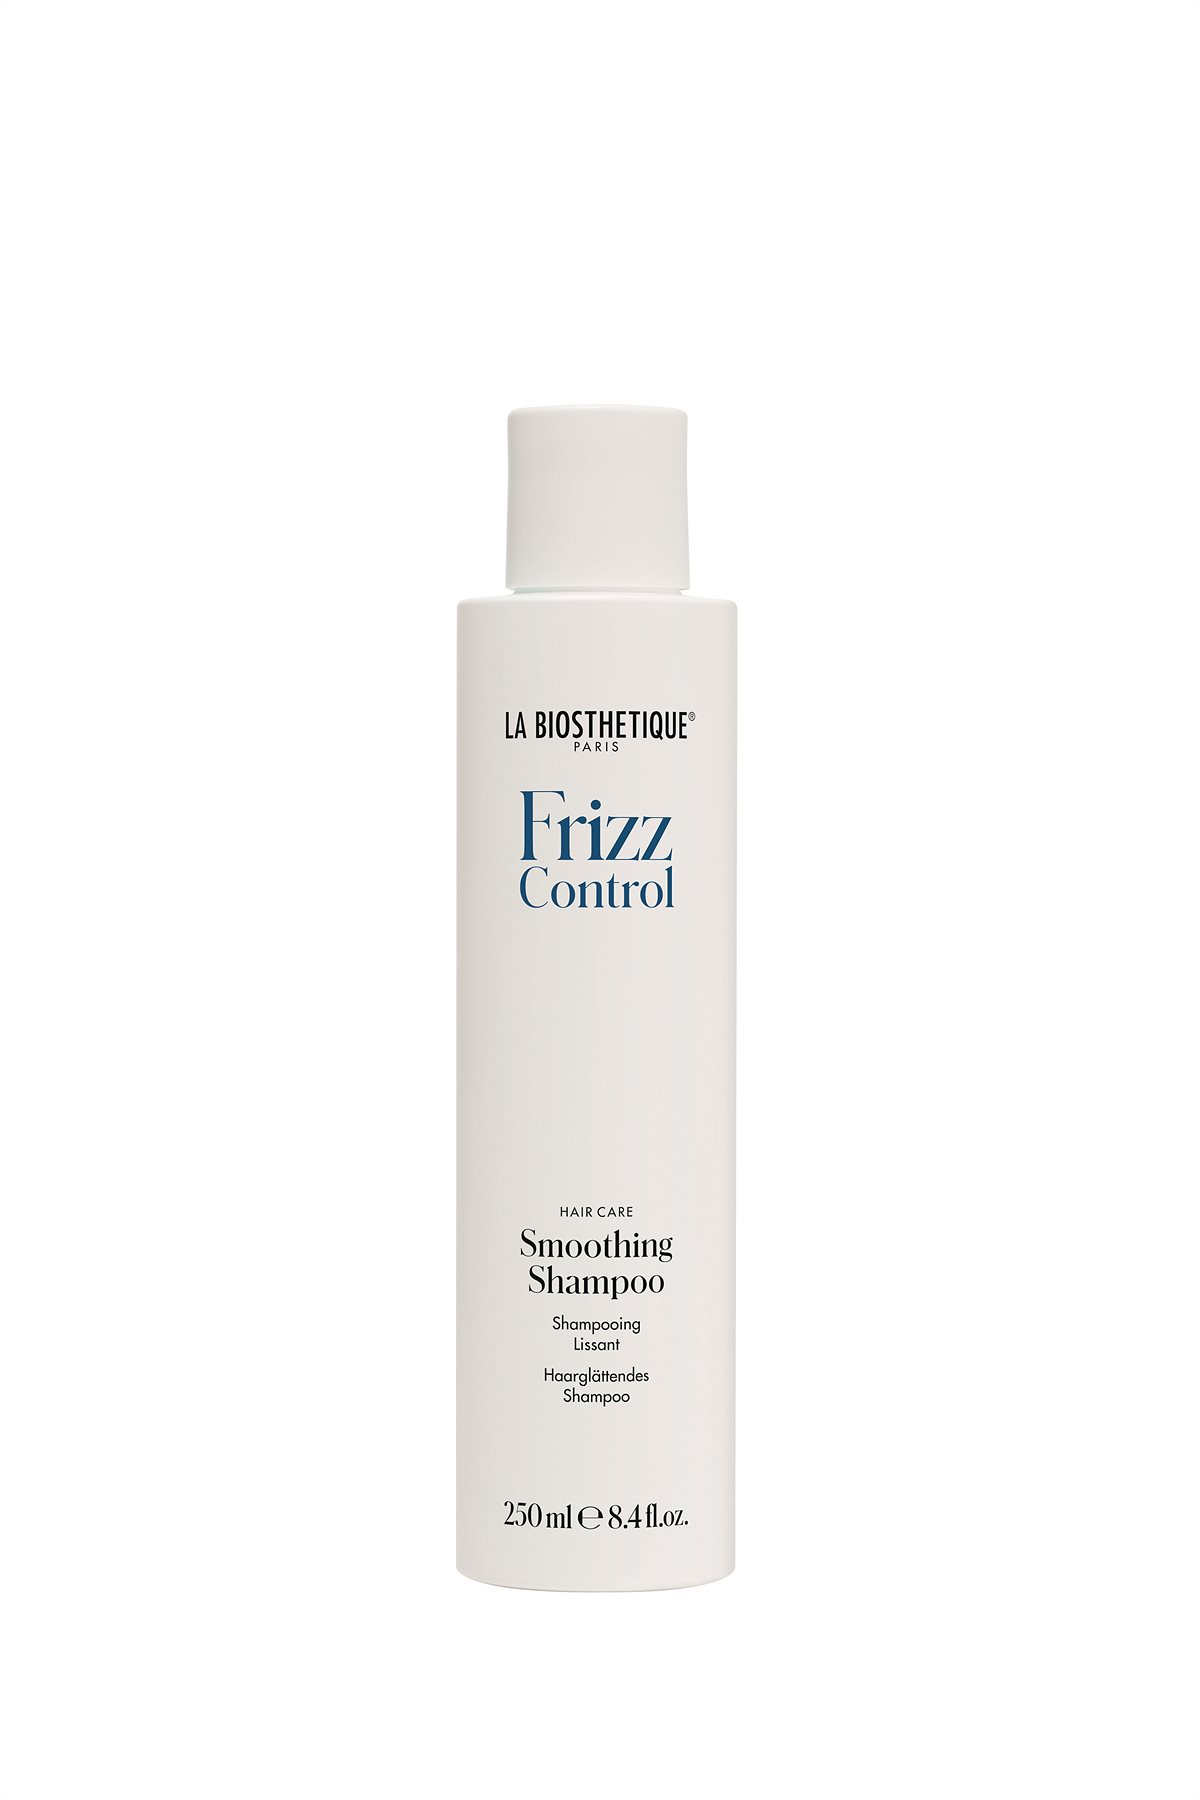 La Biosthetique_frizz-control-smoothing-shampoo_250ml_EUR 21,50 (UVP)